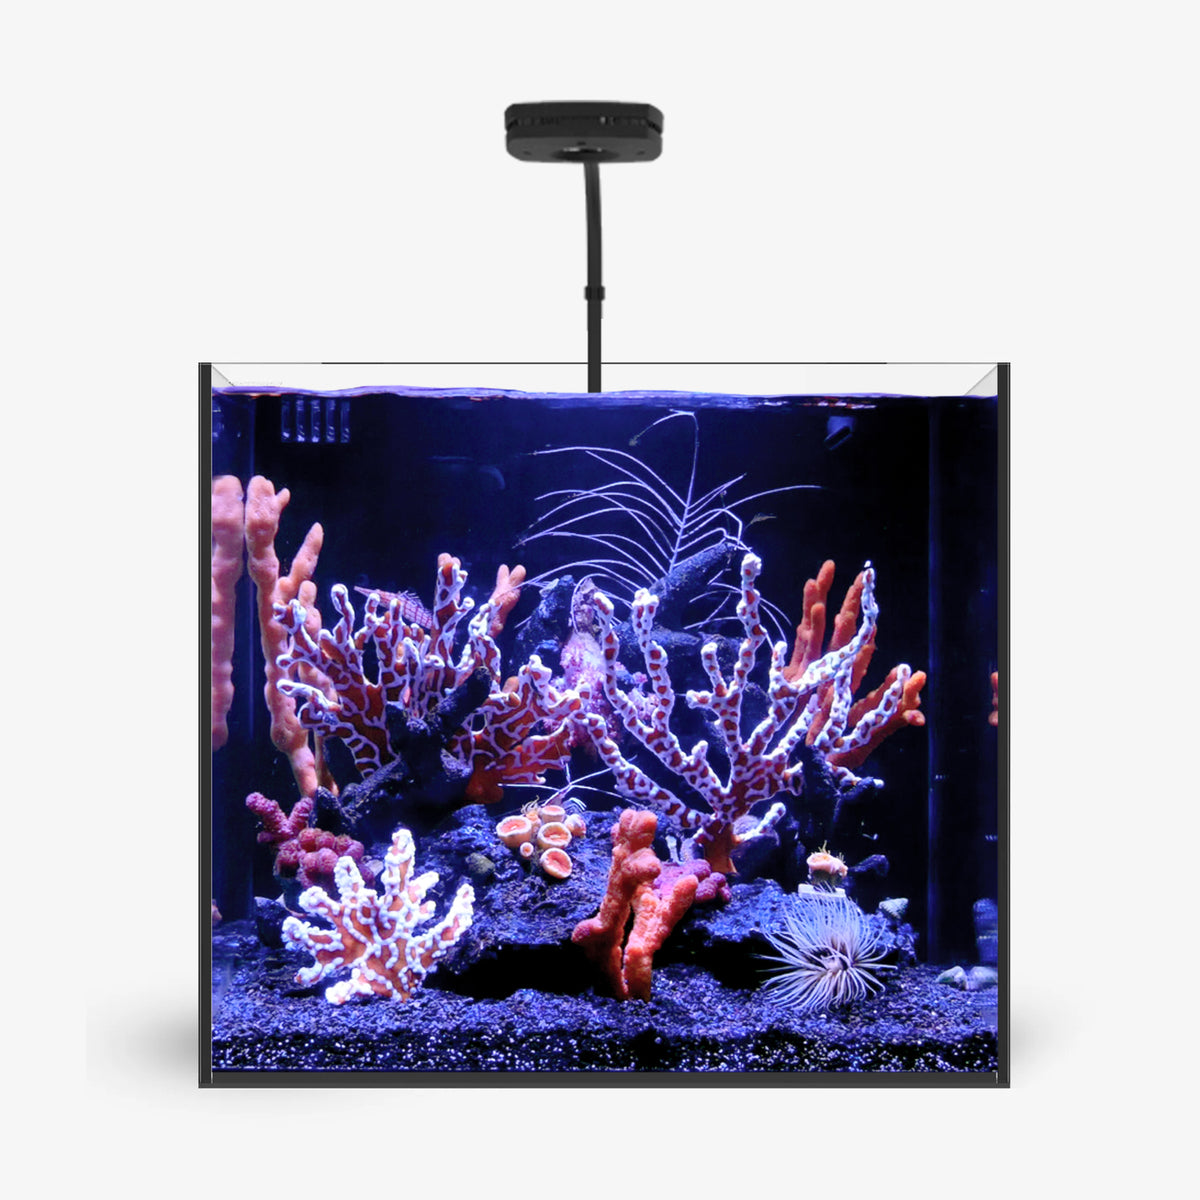 EDEN 20 Black Aquarium & Stand (20 Gallons) - Waterbox - Bulk Reef Supply